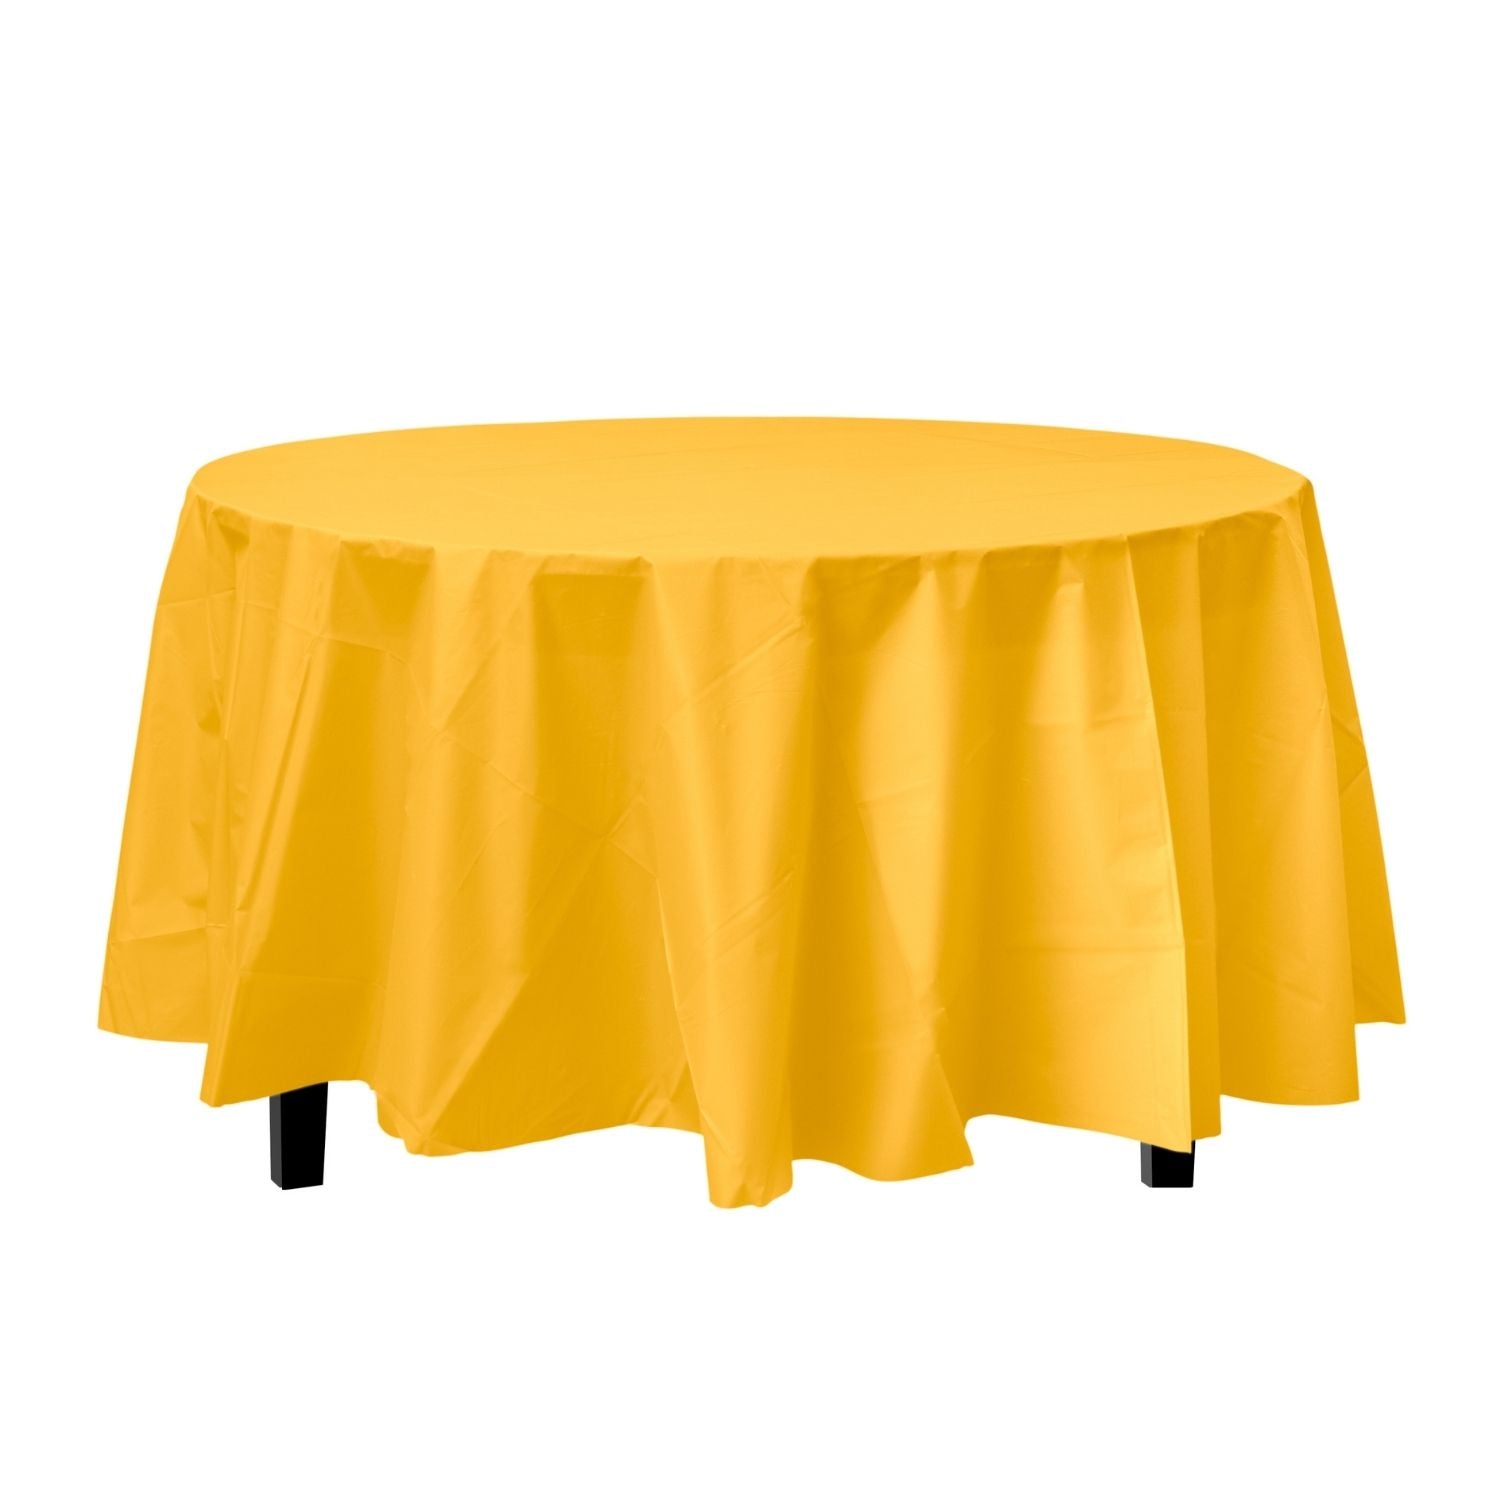 Premium Round Yellow Plastic Tablecloth | 96 Count